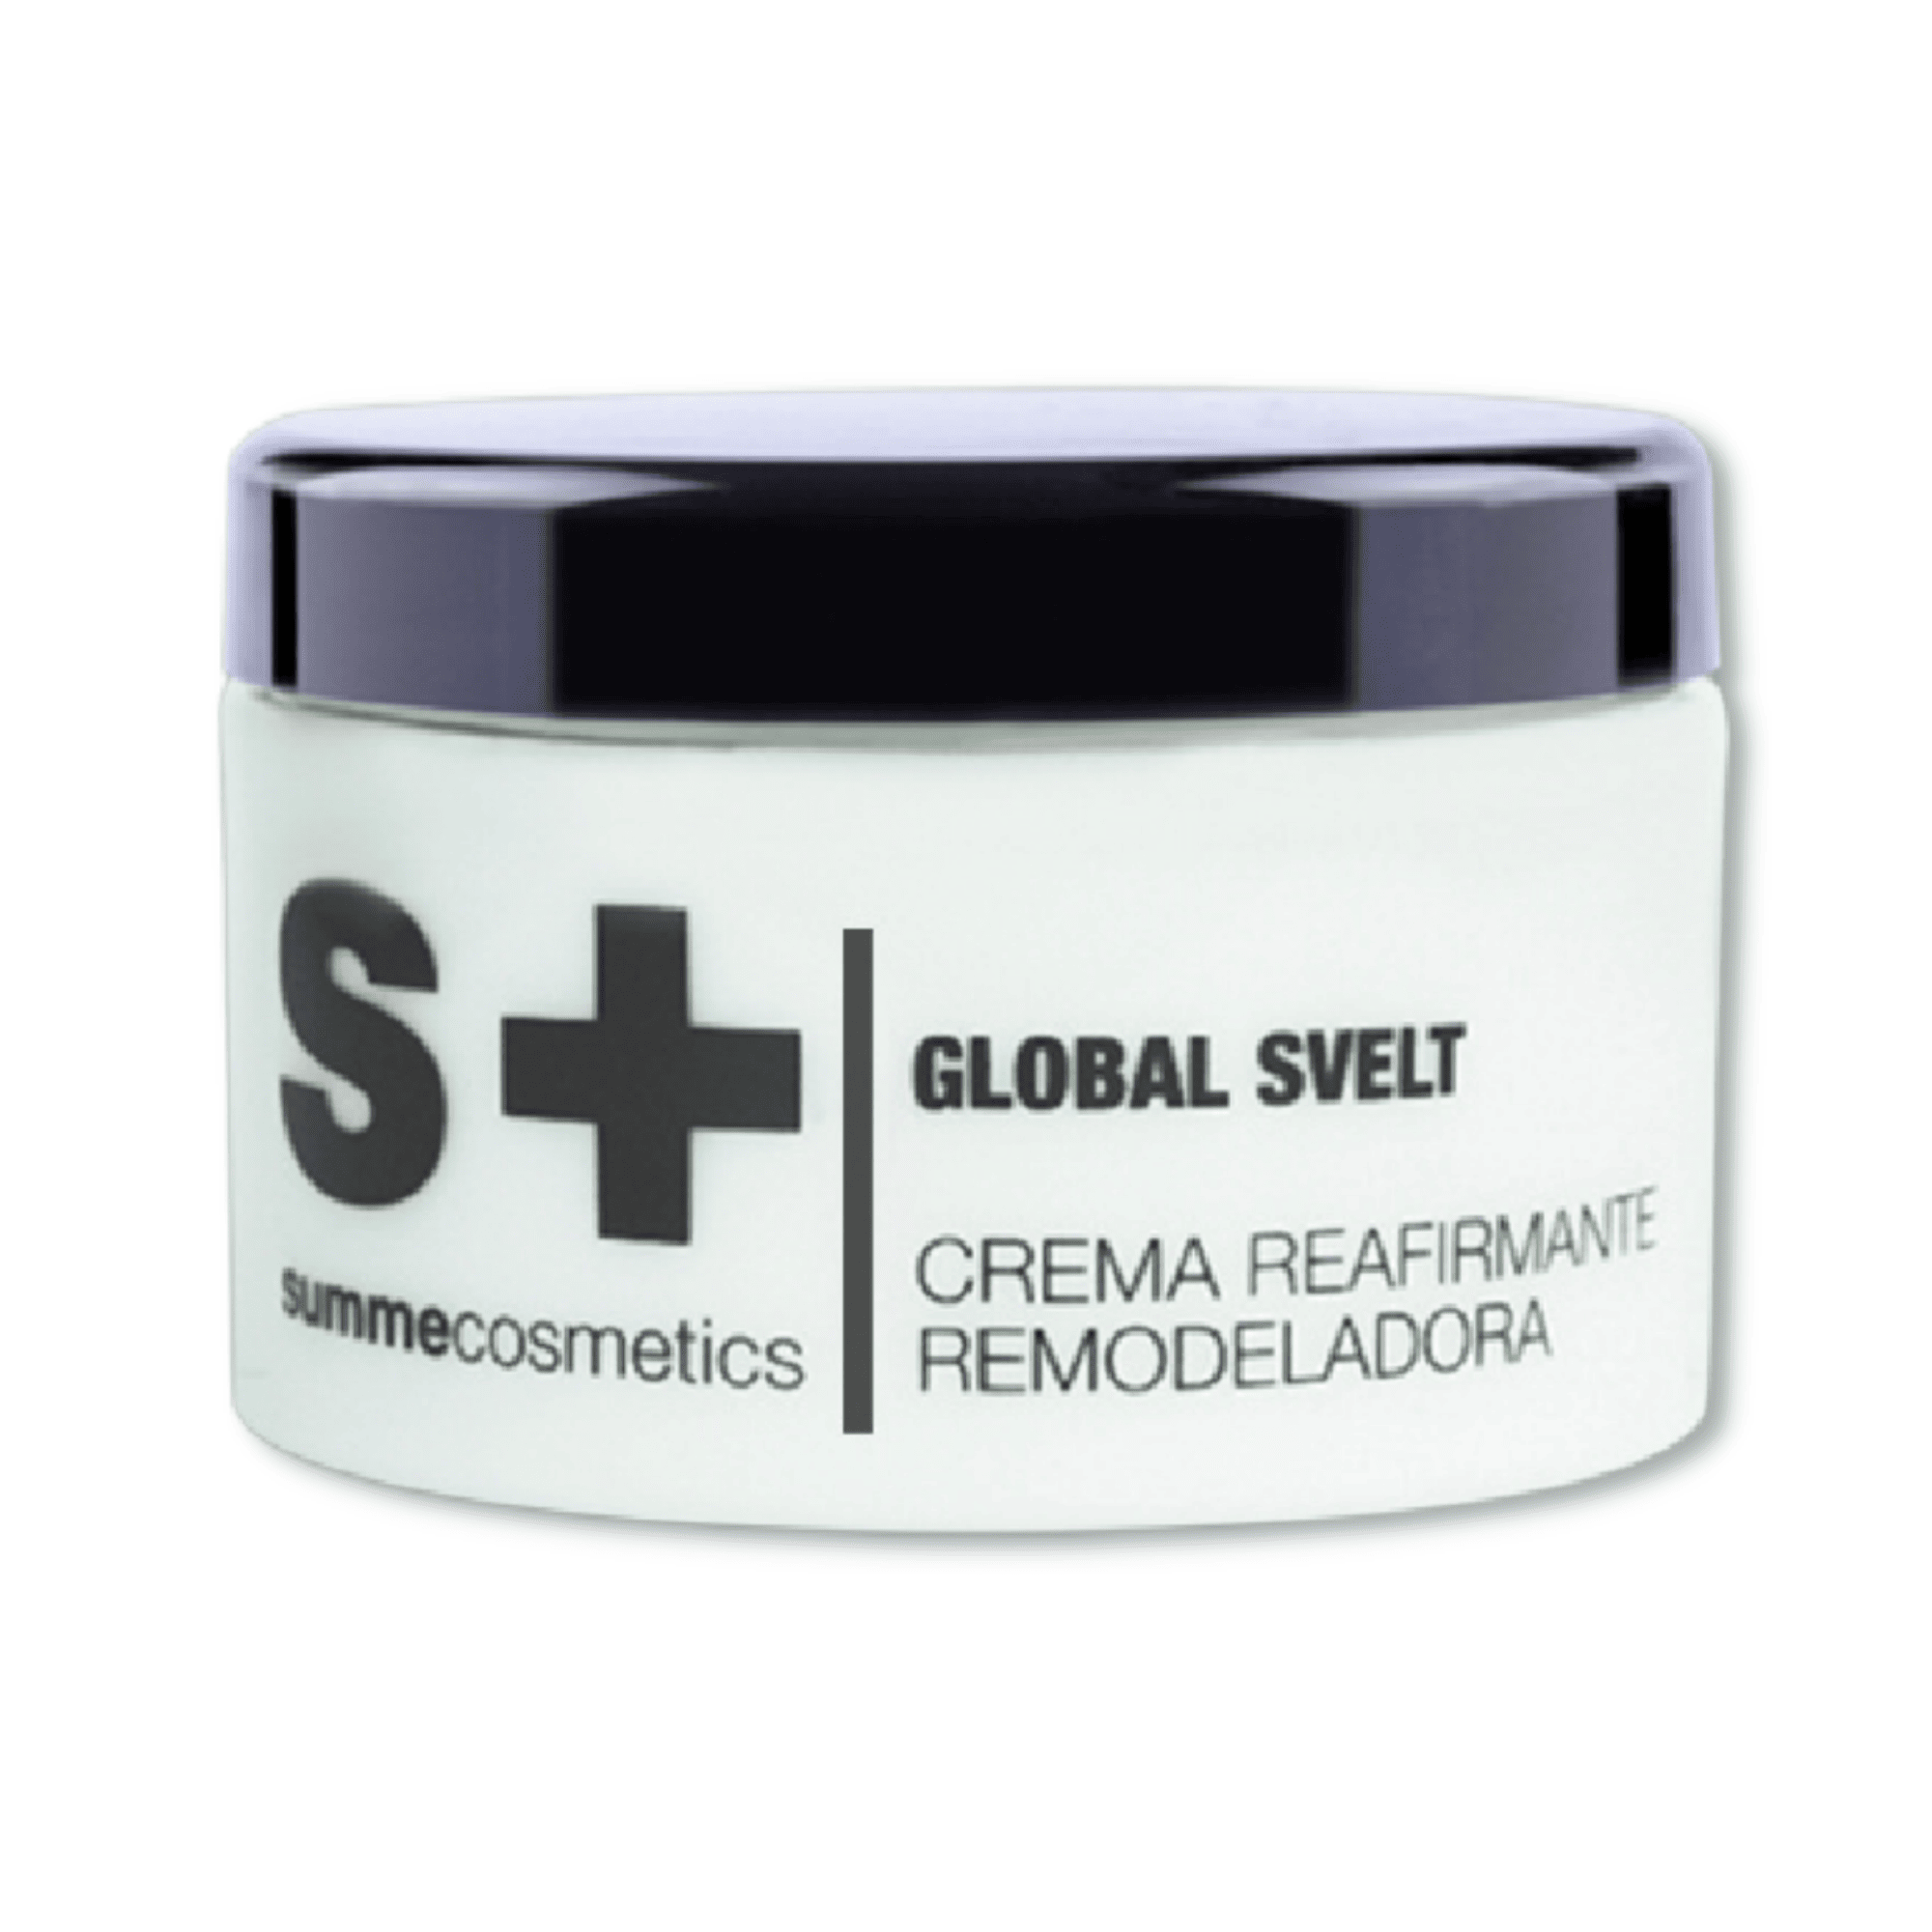 Summe Cosmetics Global Svelt - Crema Reafirmante Remodeladora